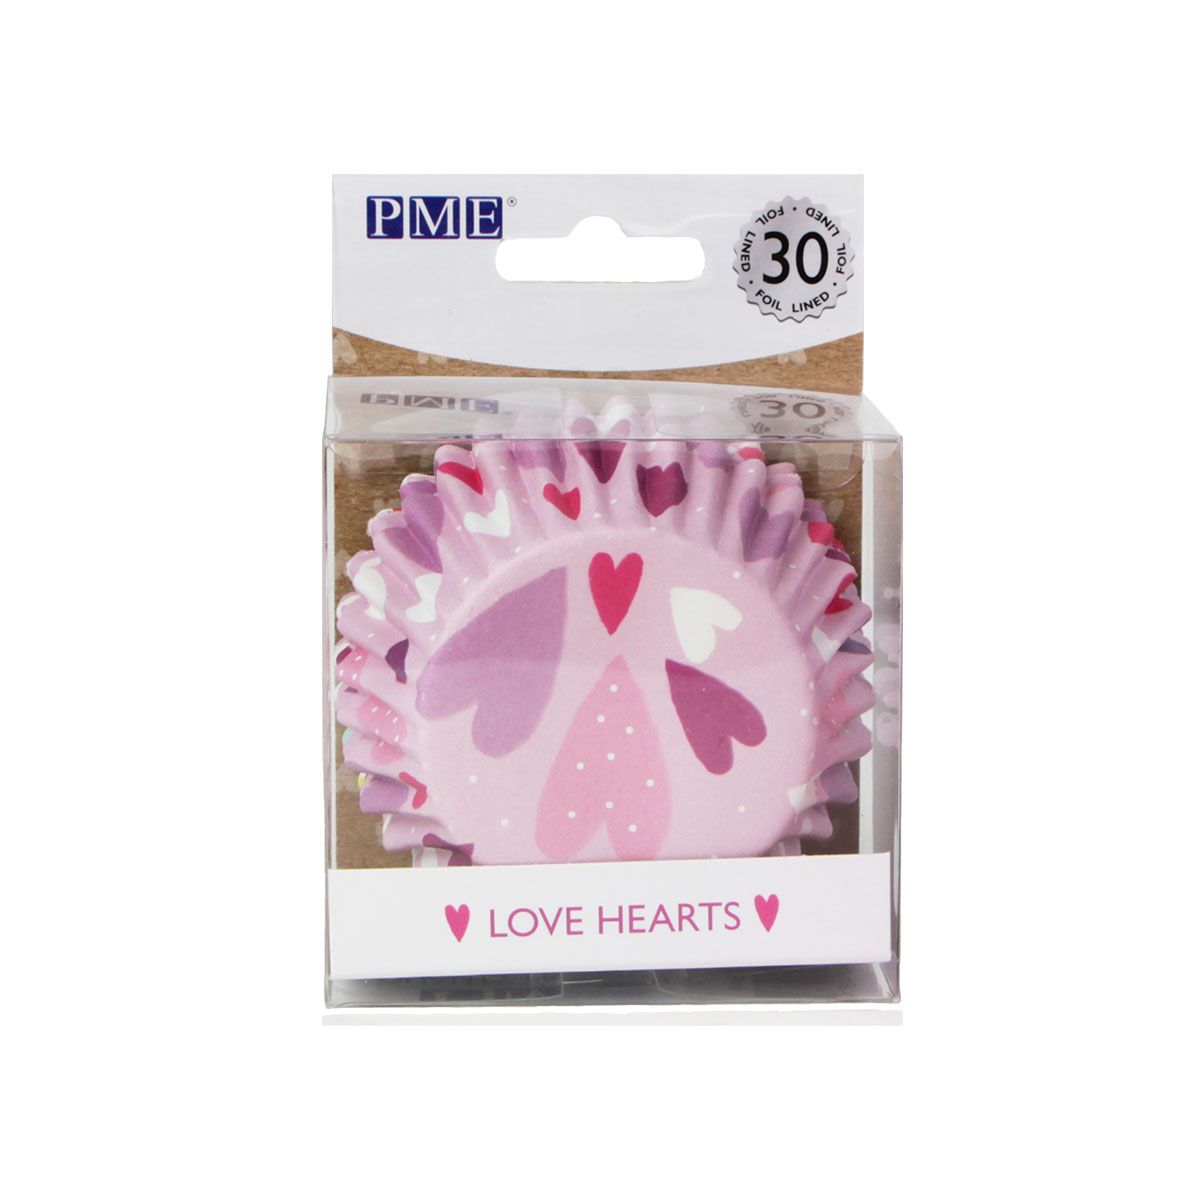 Formas Diversas - Cápsula Para Cupcake PME LOVE HEARTS PK / 30